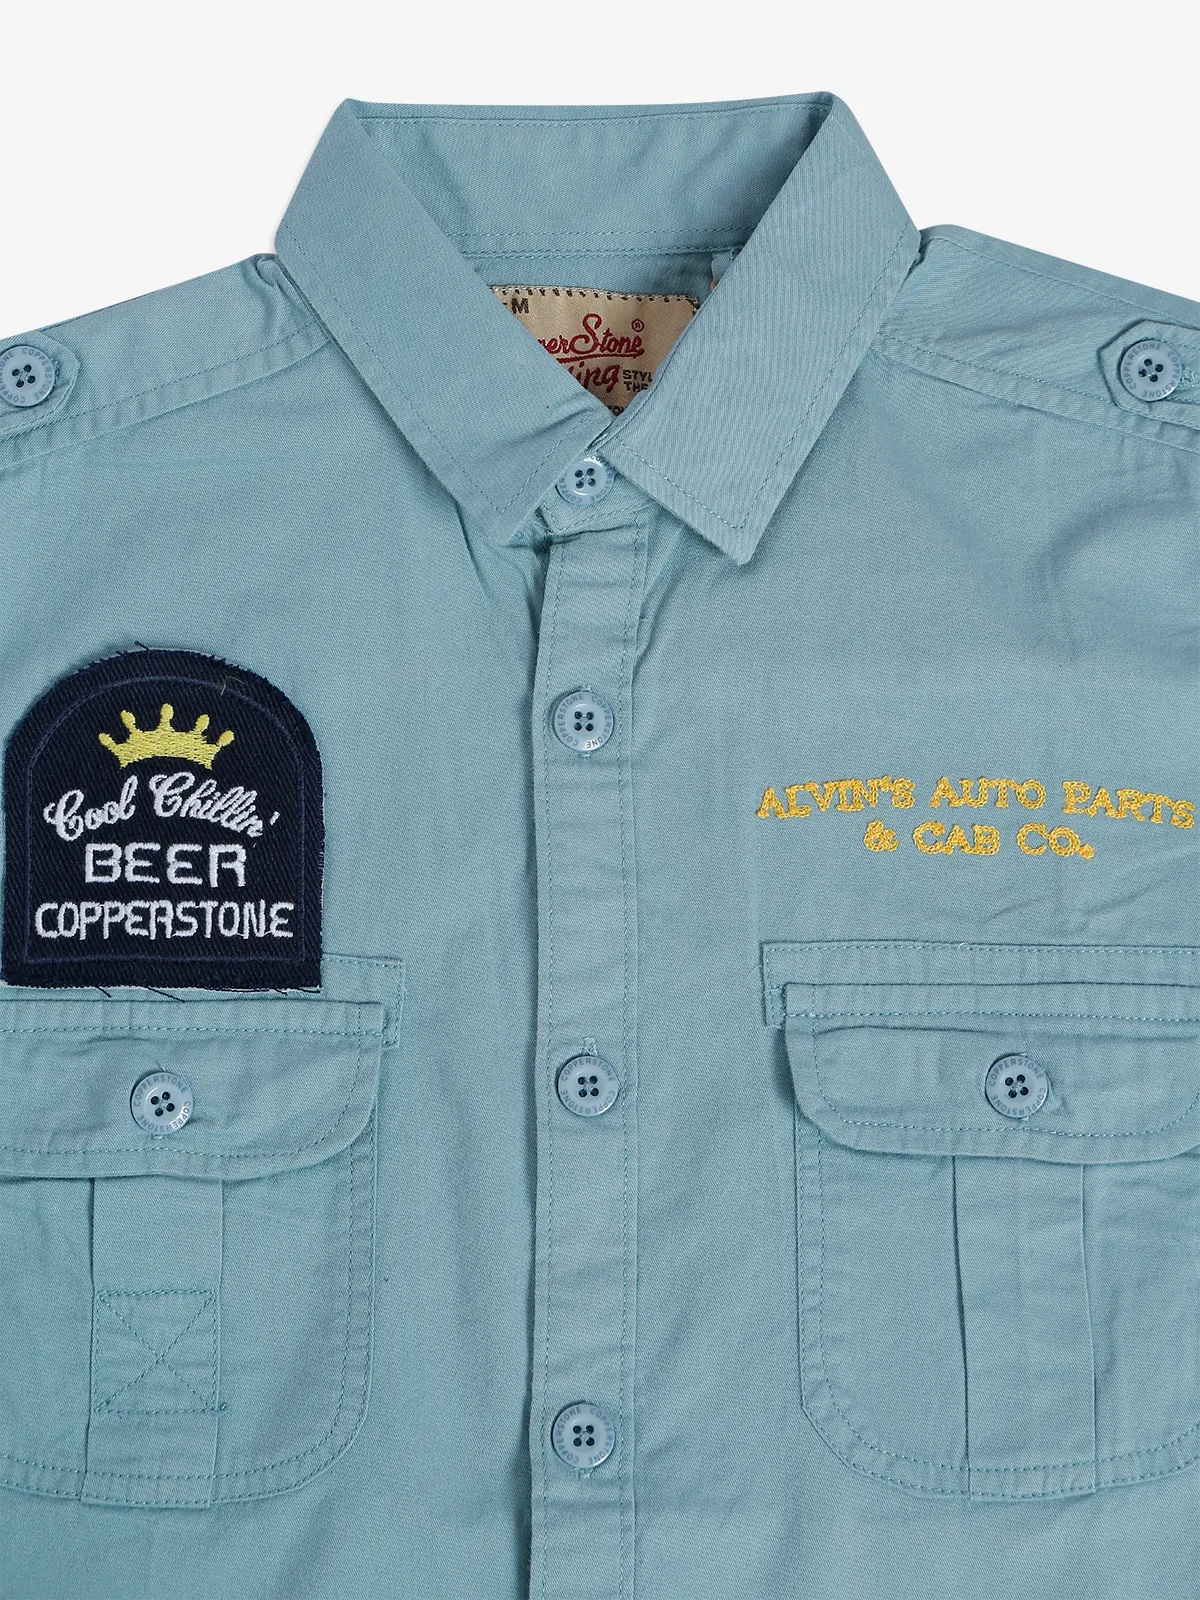 Copperstone light blue cotton shirt